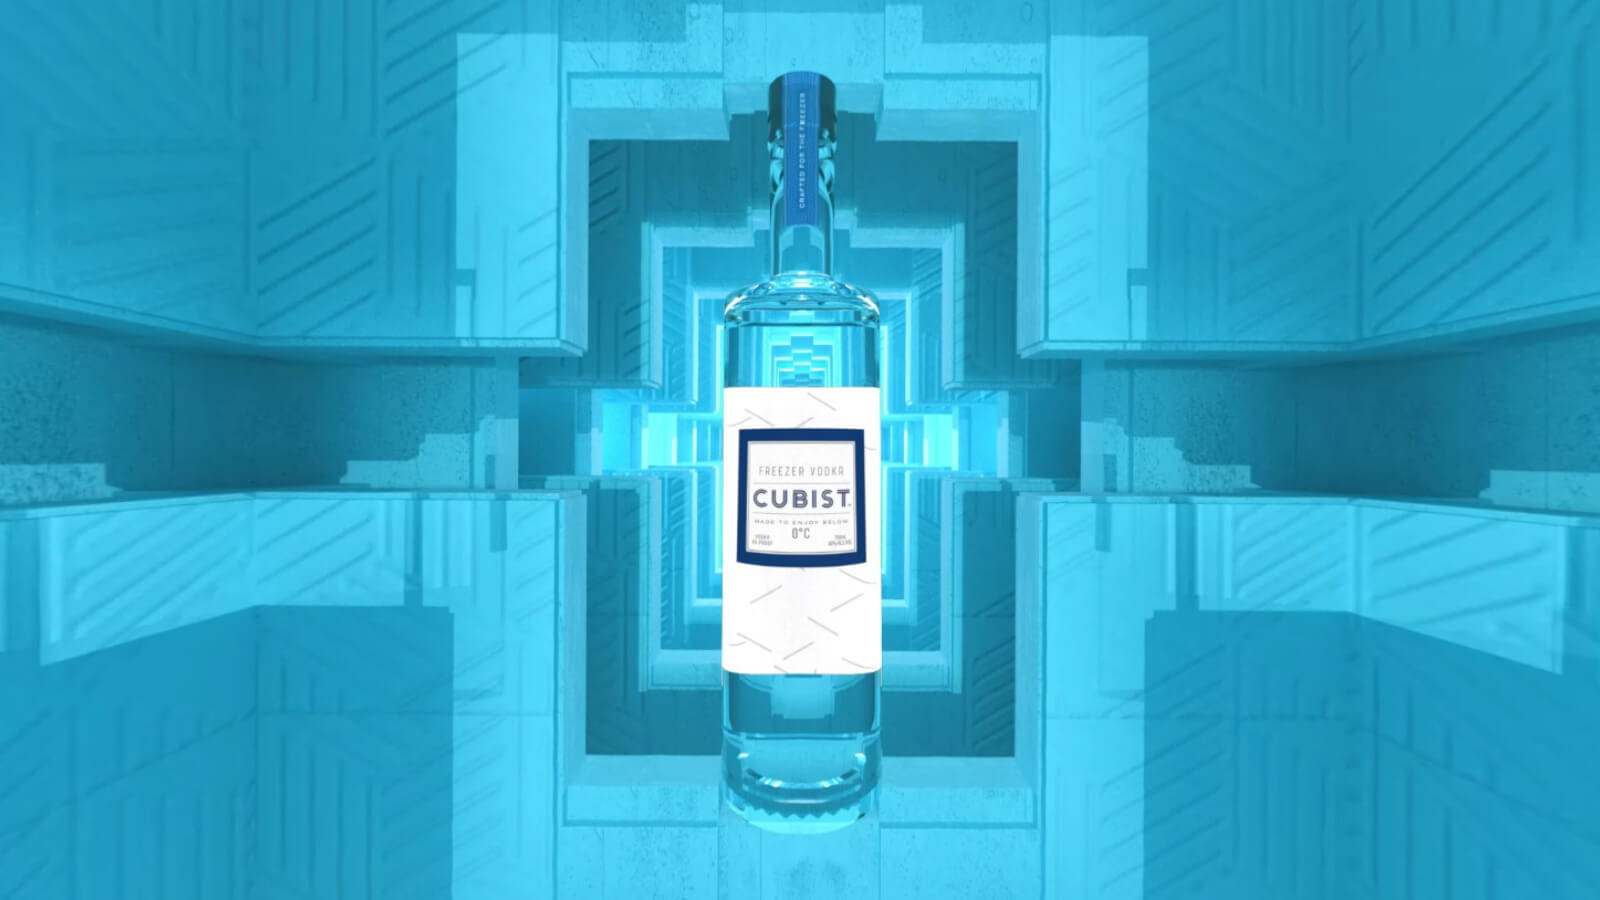 A bottle of Cubist vodka on a blue angular background